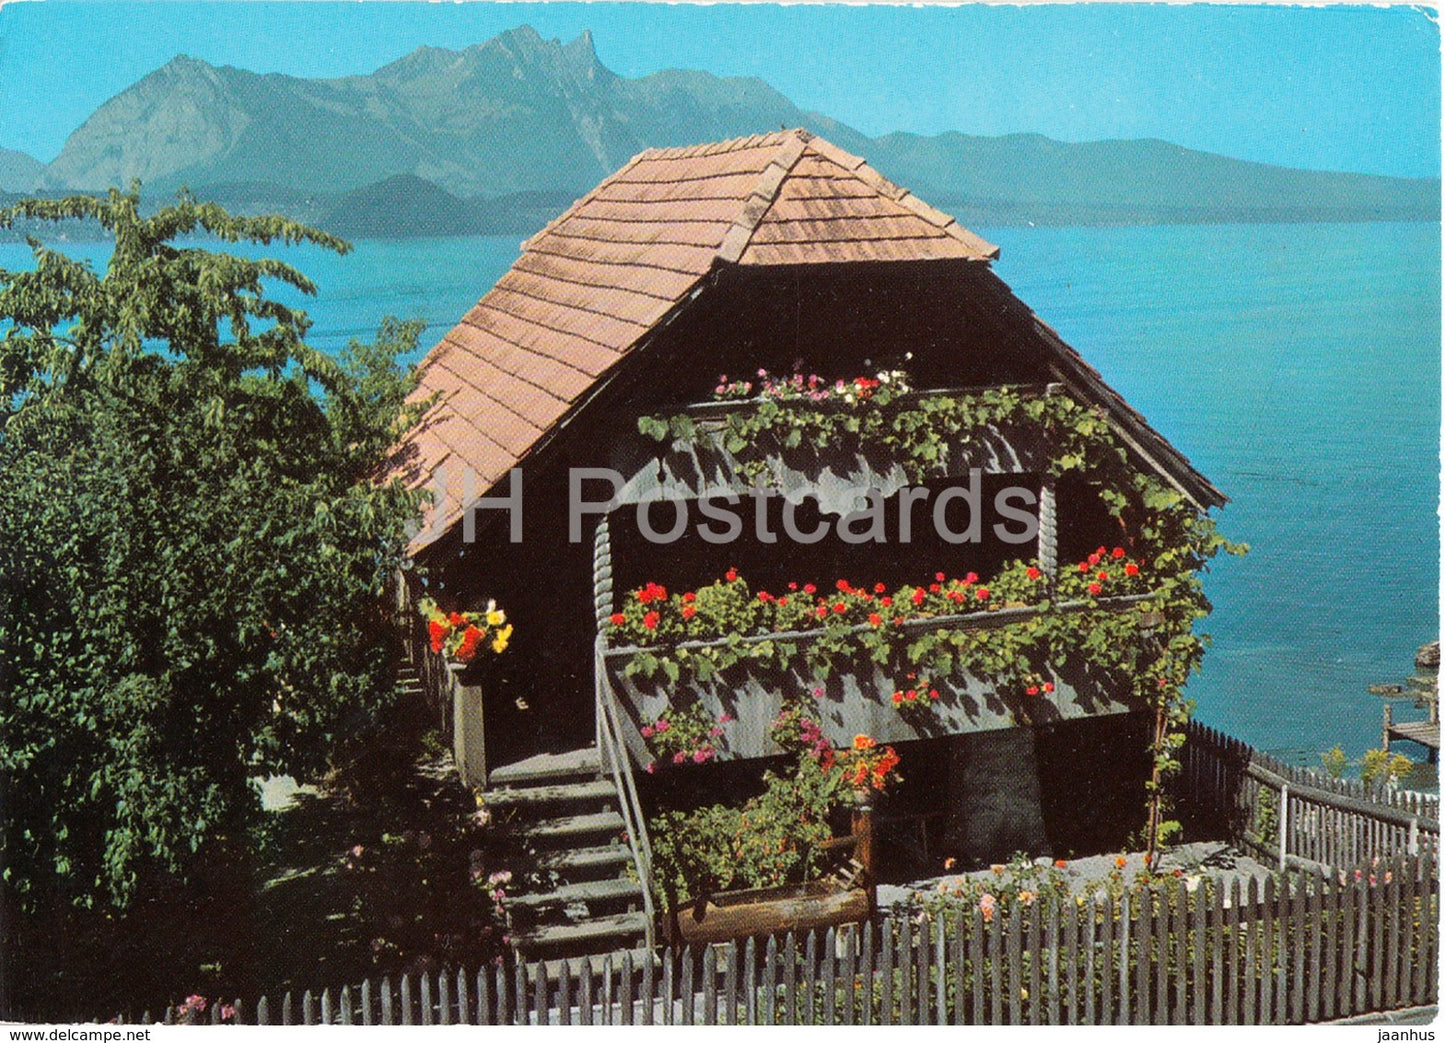 Alter Speicher in Kirche Merligen am Thunersee - church - 8755 - 1974 - Switzerland - used - JH Postcards